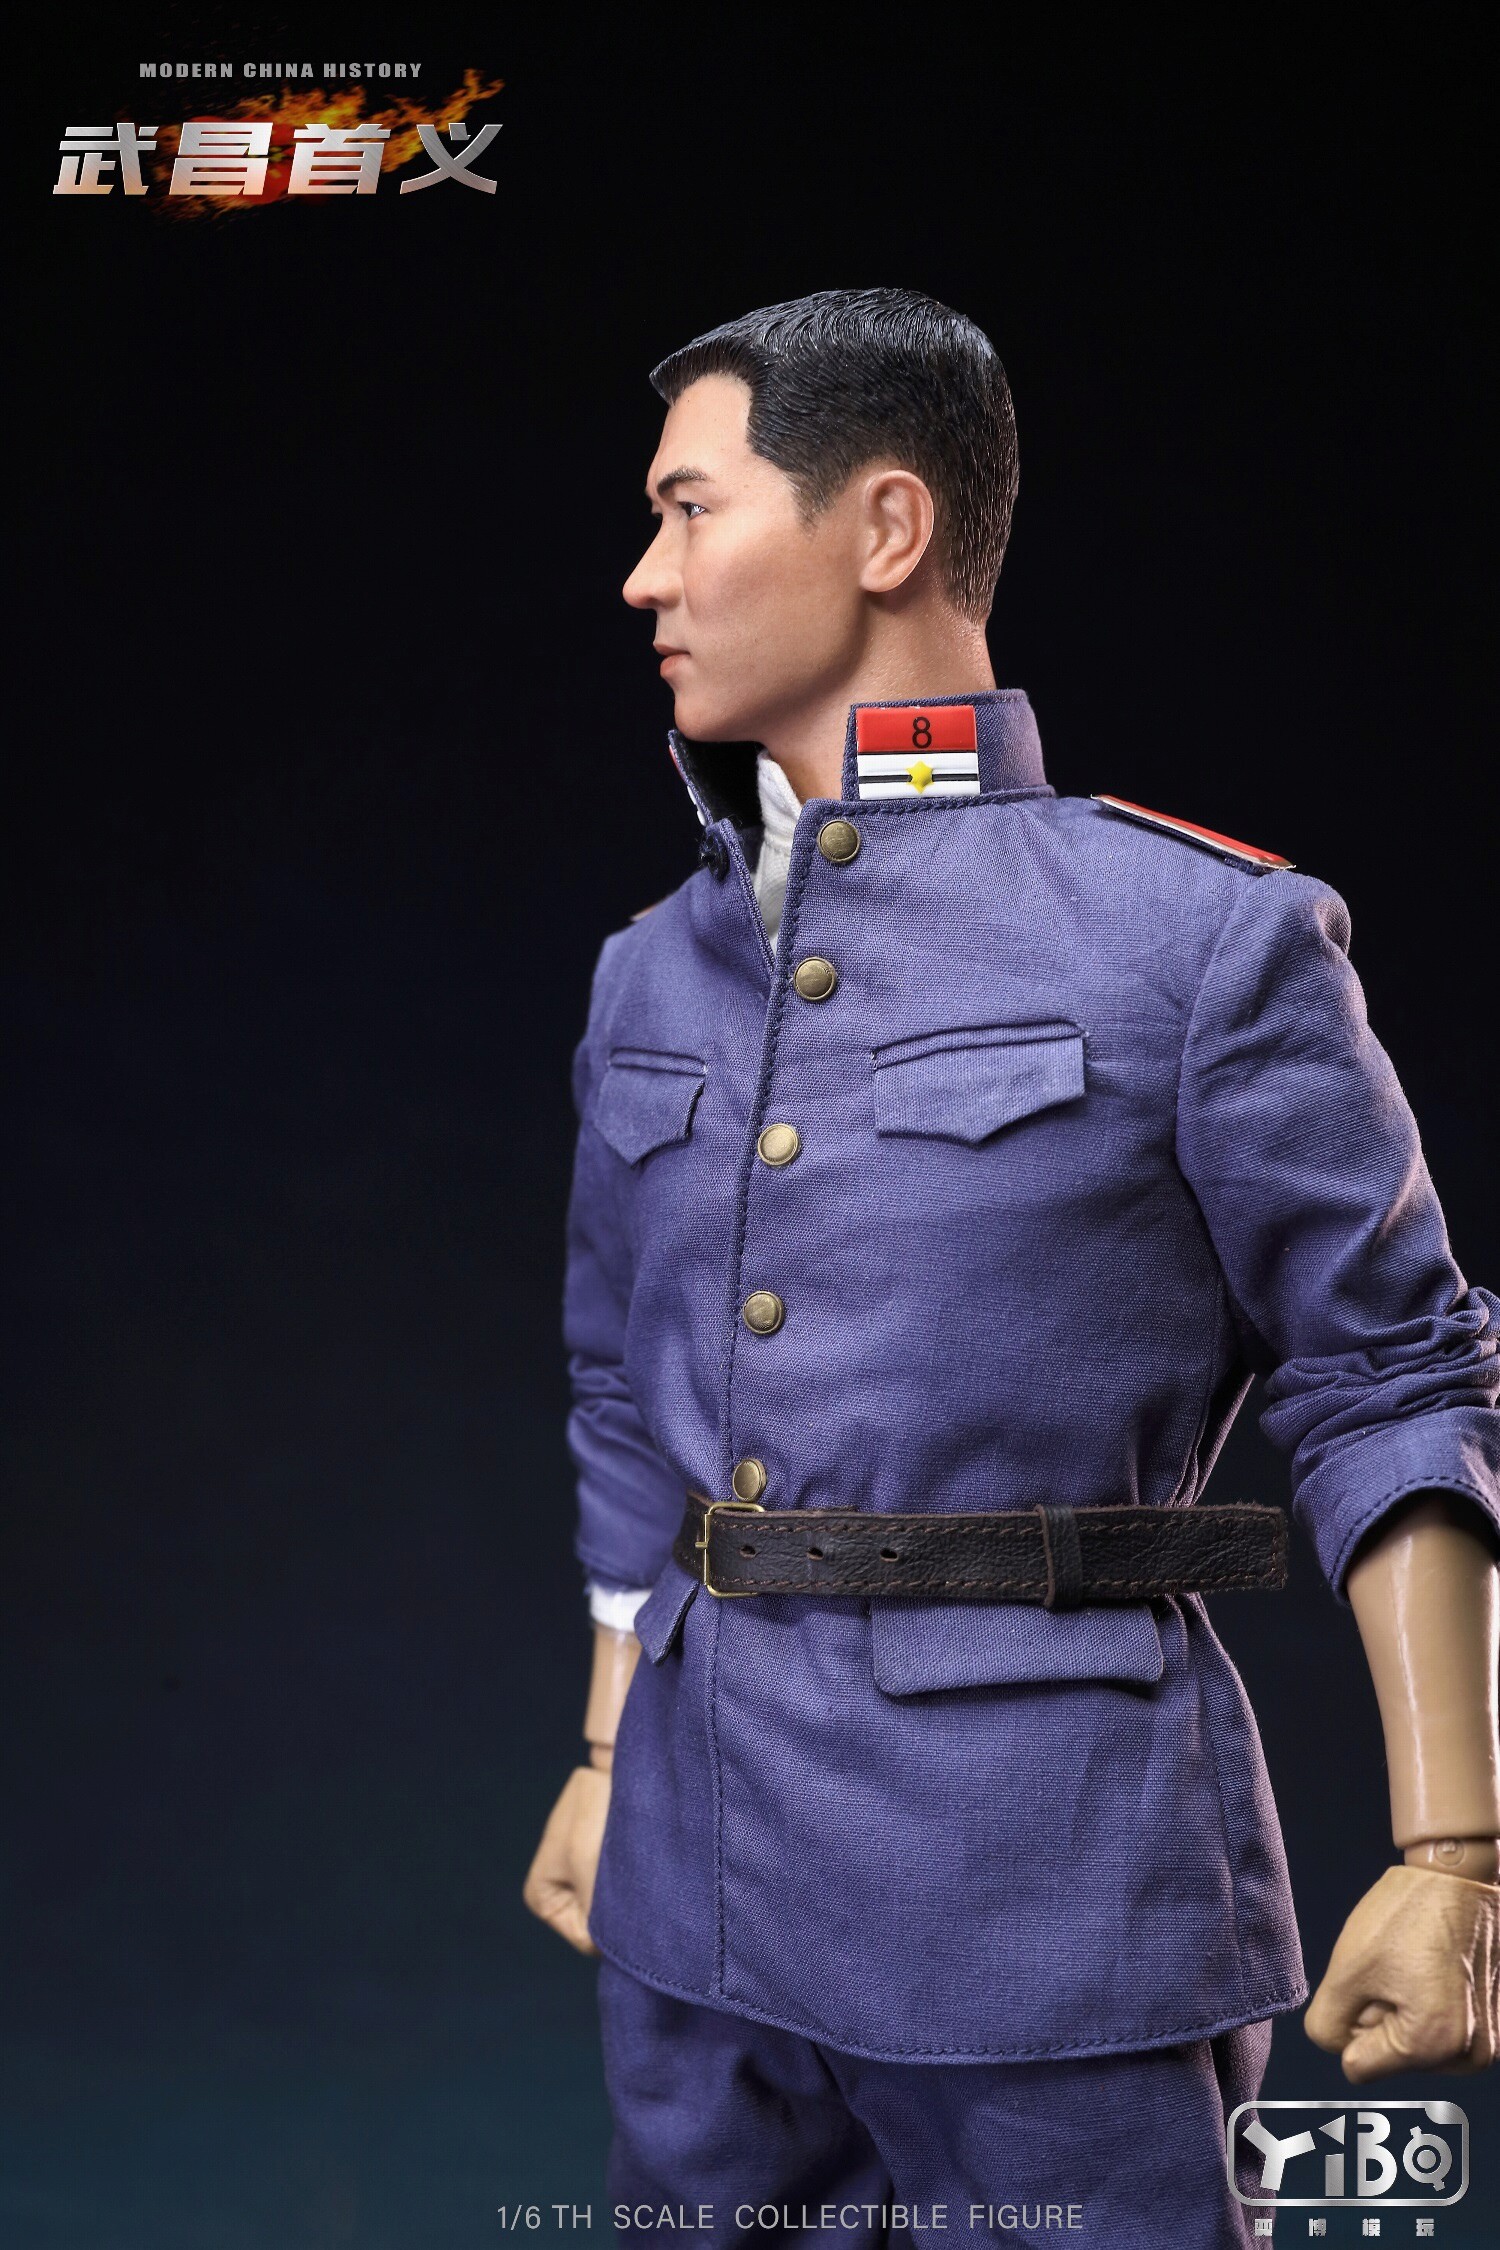 Soldier - NEW PRODUCT: Yibo model - Wuchang Shouyi #YIBO 004 0387